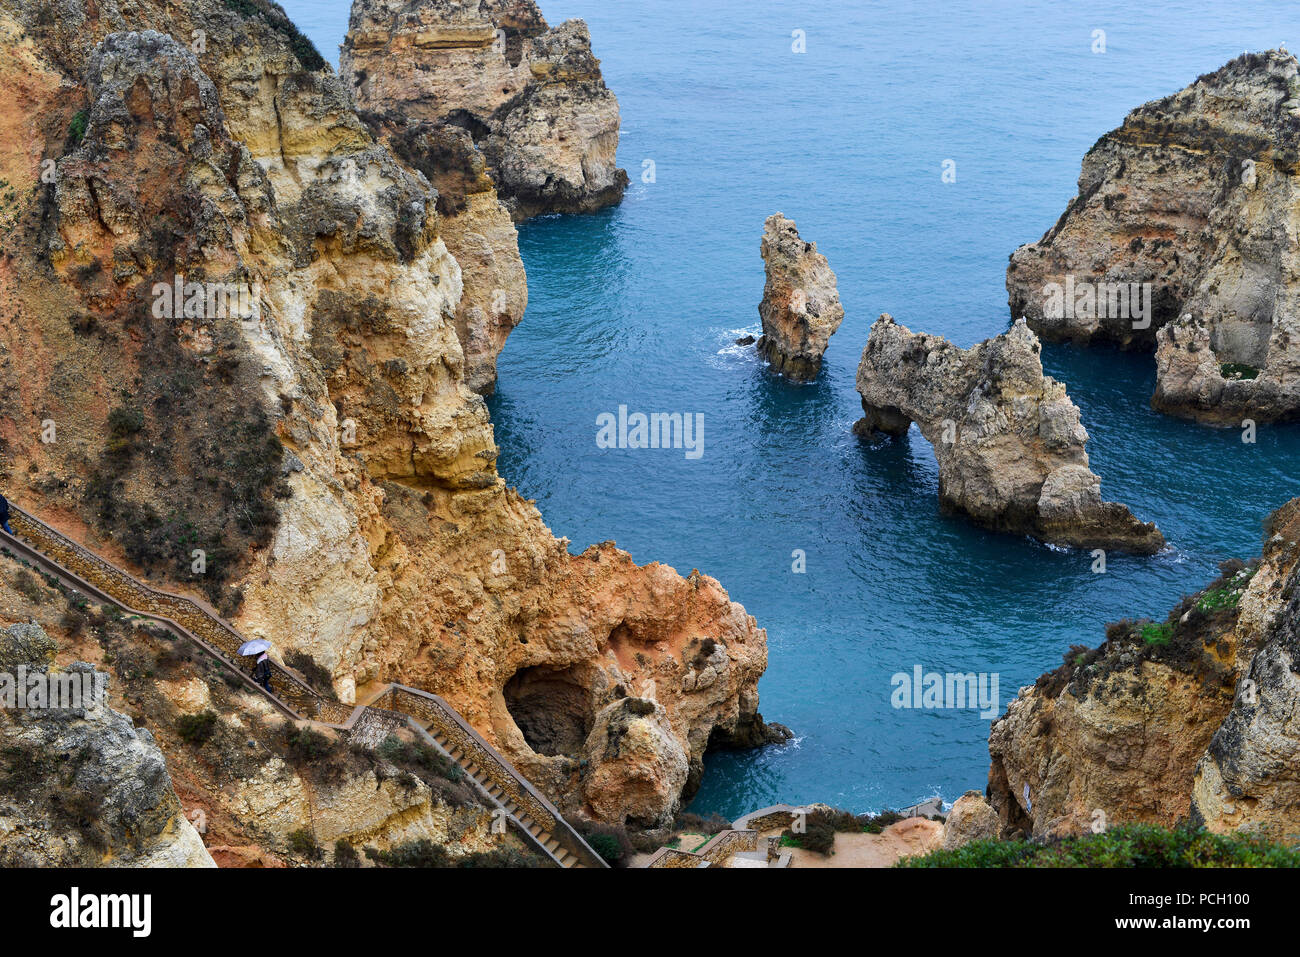 Portugal, region of the Algarve, Lagos: la Ponta da Piedade, cliffs and rocks along the coast Stock Photo